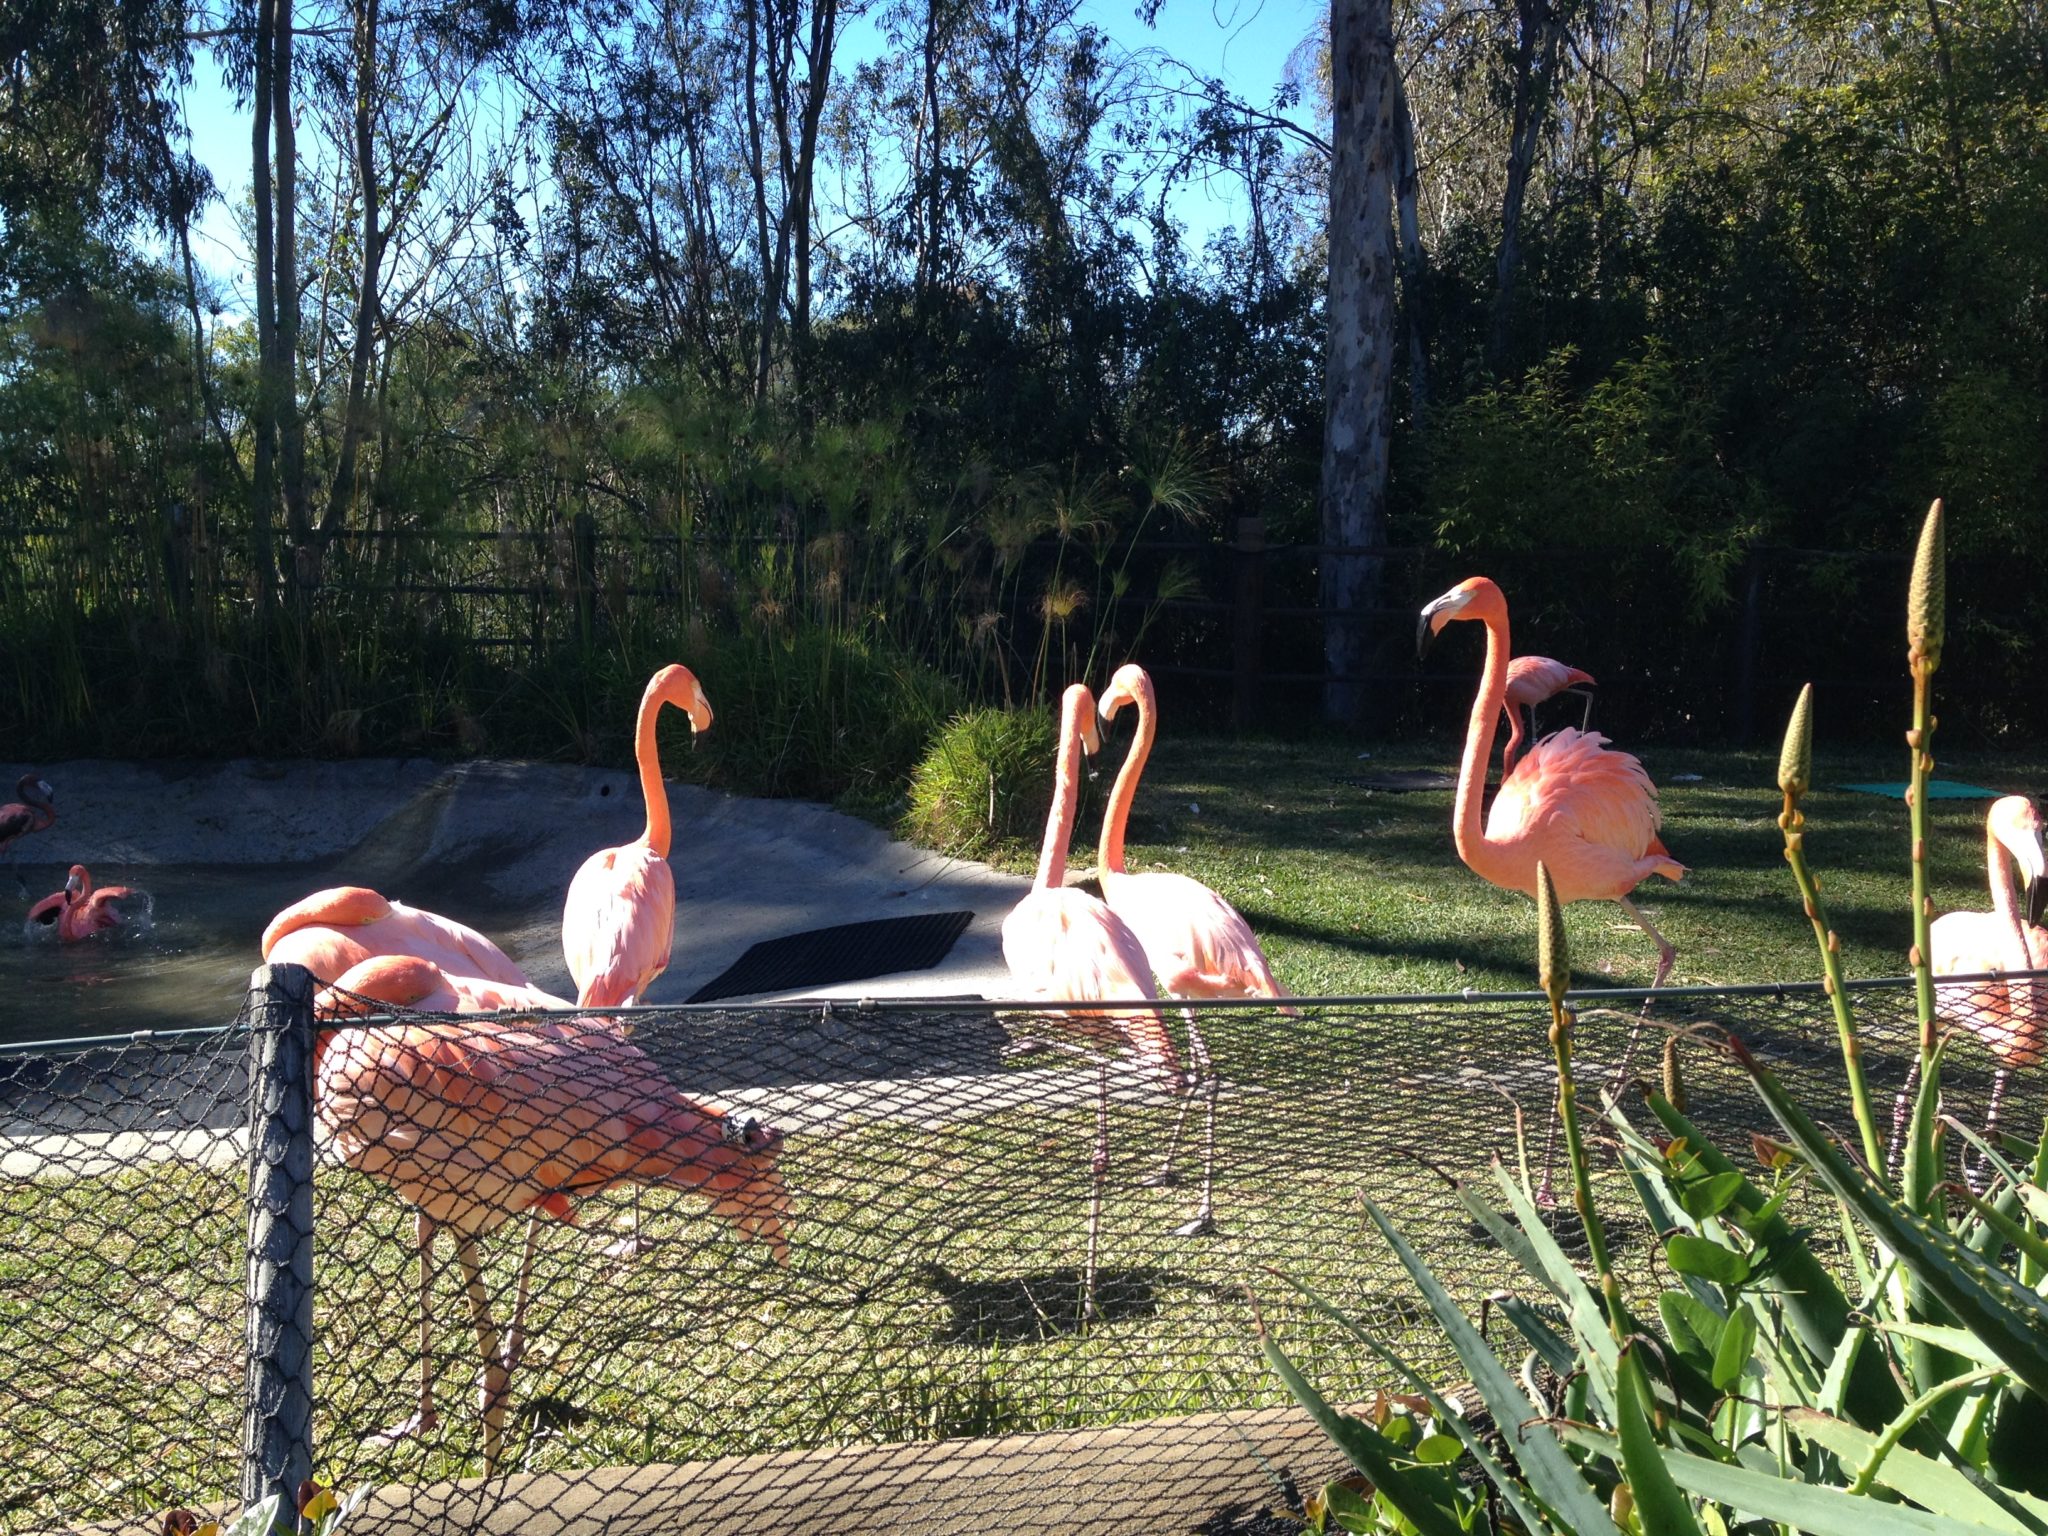 Flamingos hanging out